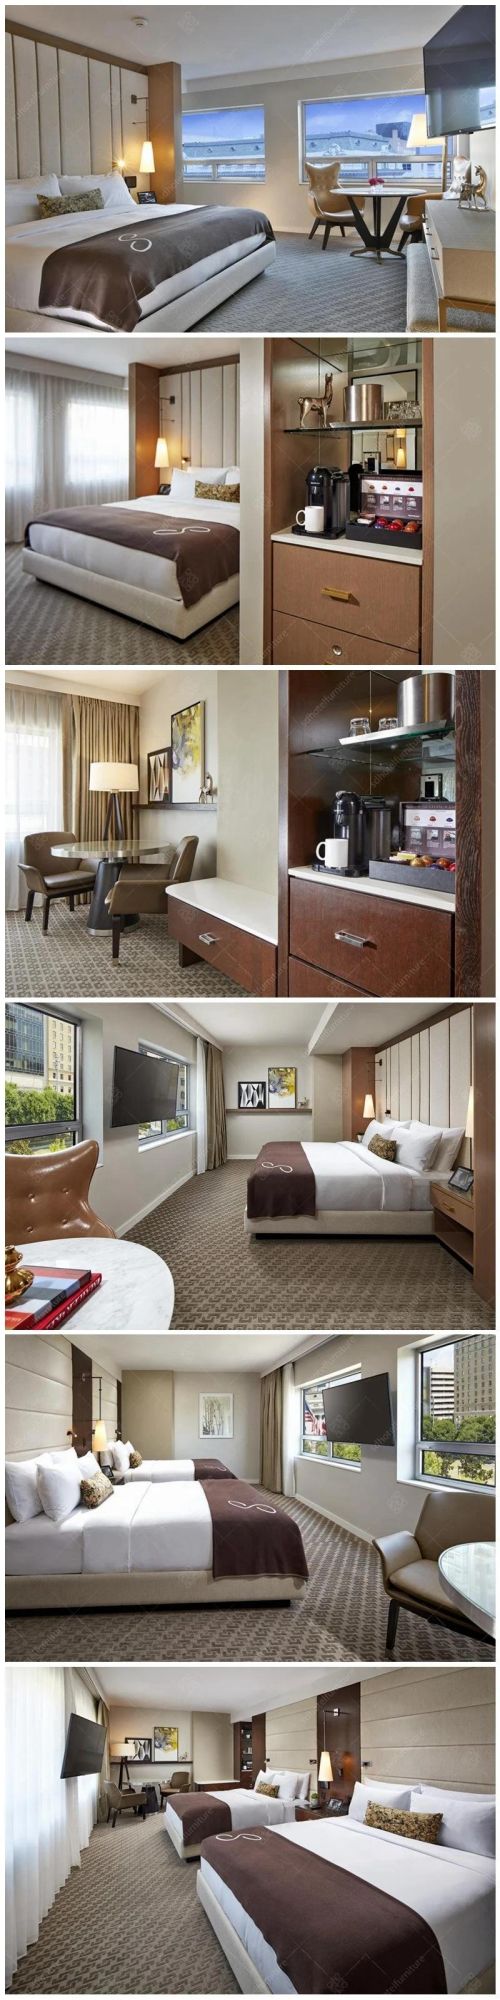 Artistic Design Fashion Hotel Bedroom Furniture Sets Commercial Use for Sale